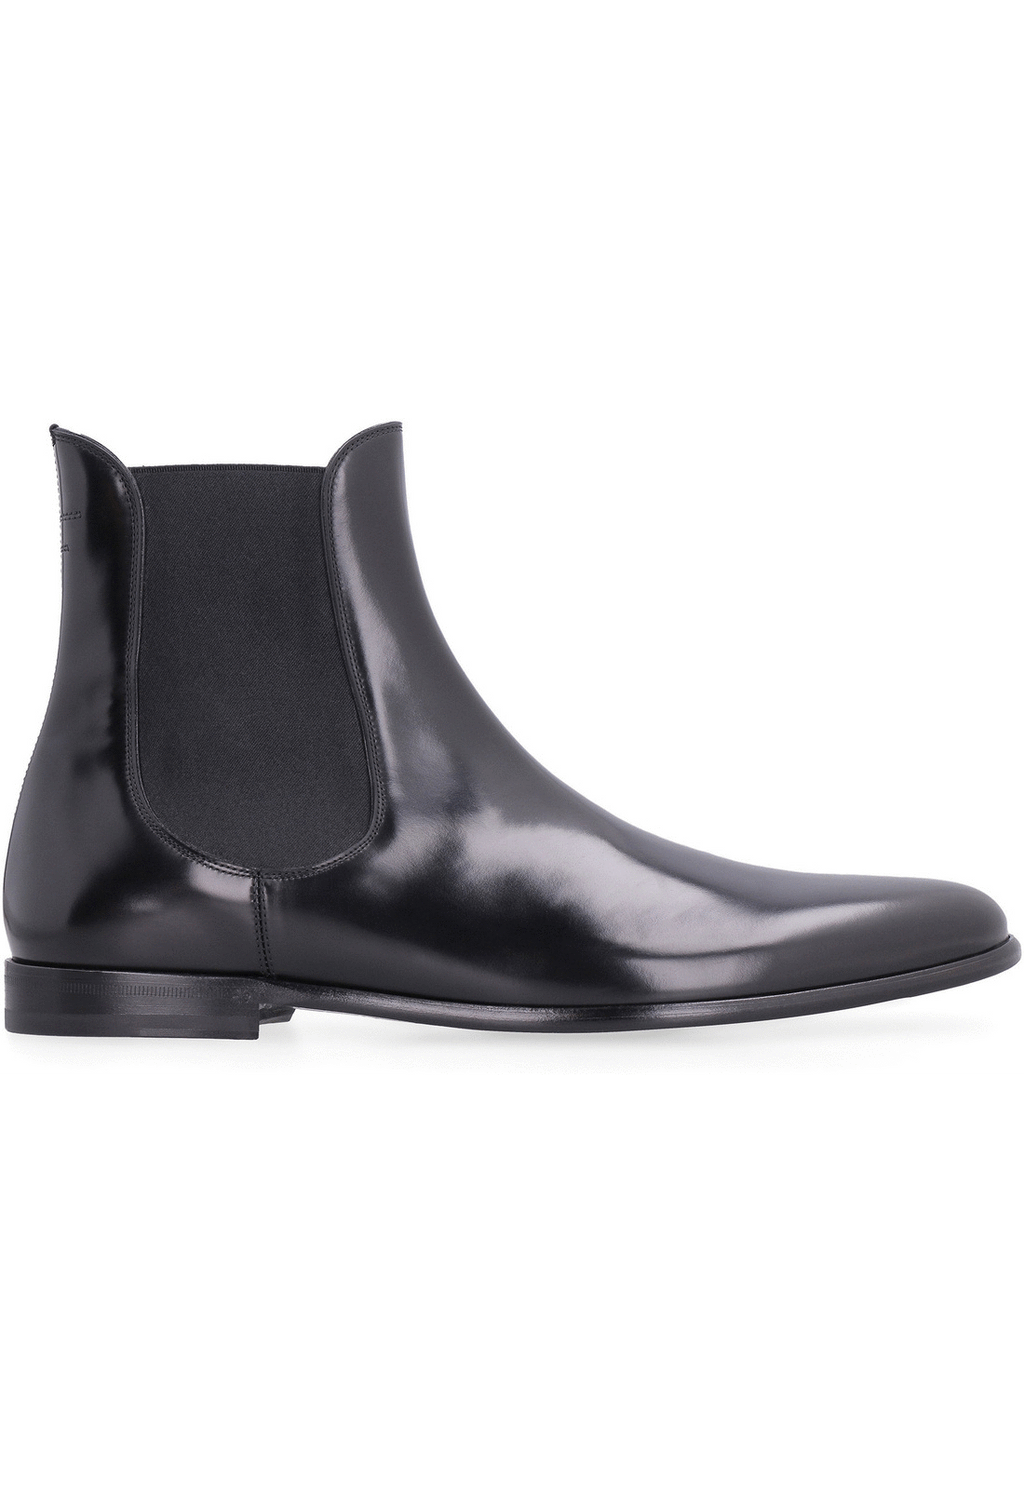 Spazzolato leather Chelsea boots